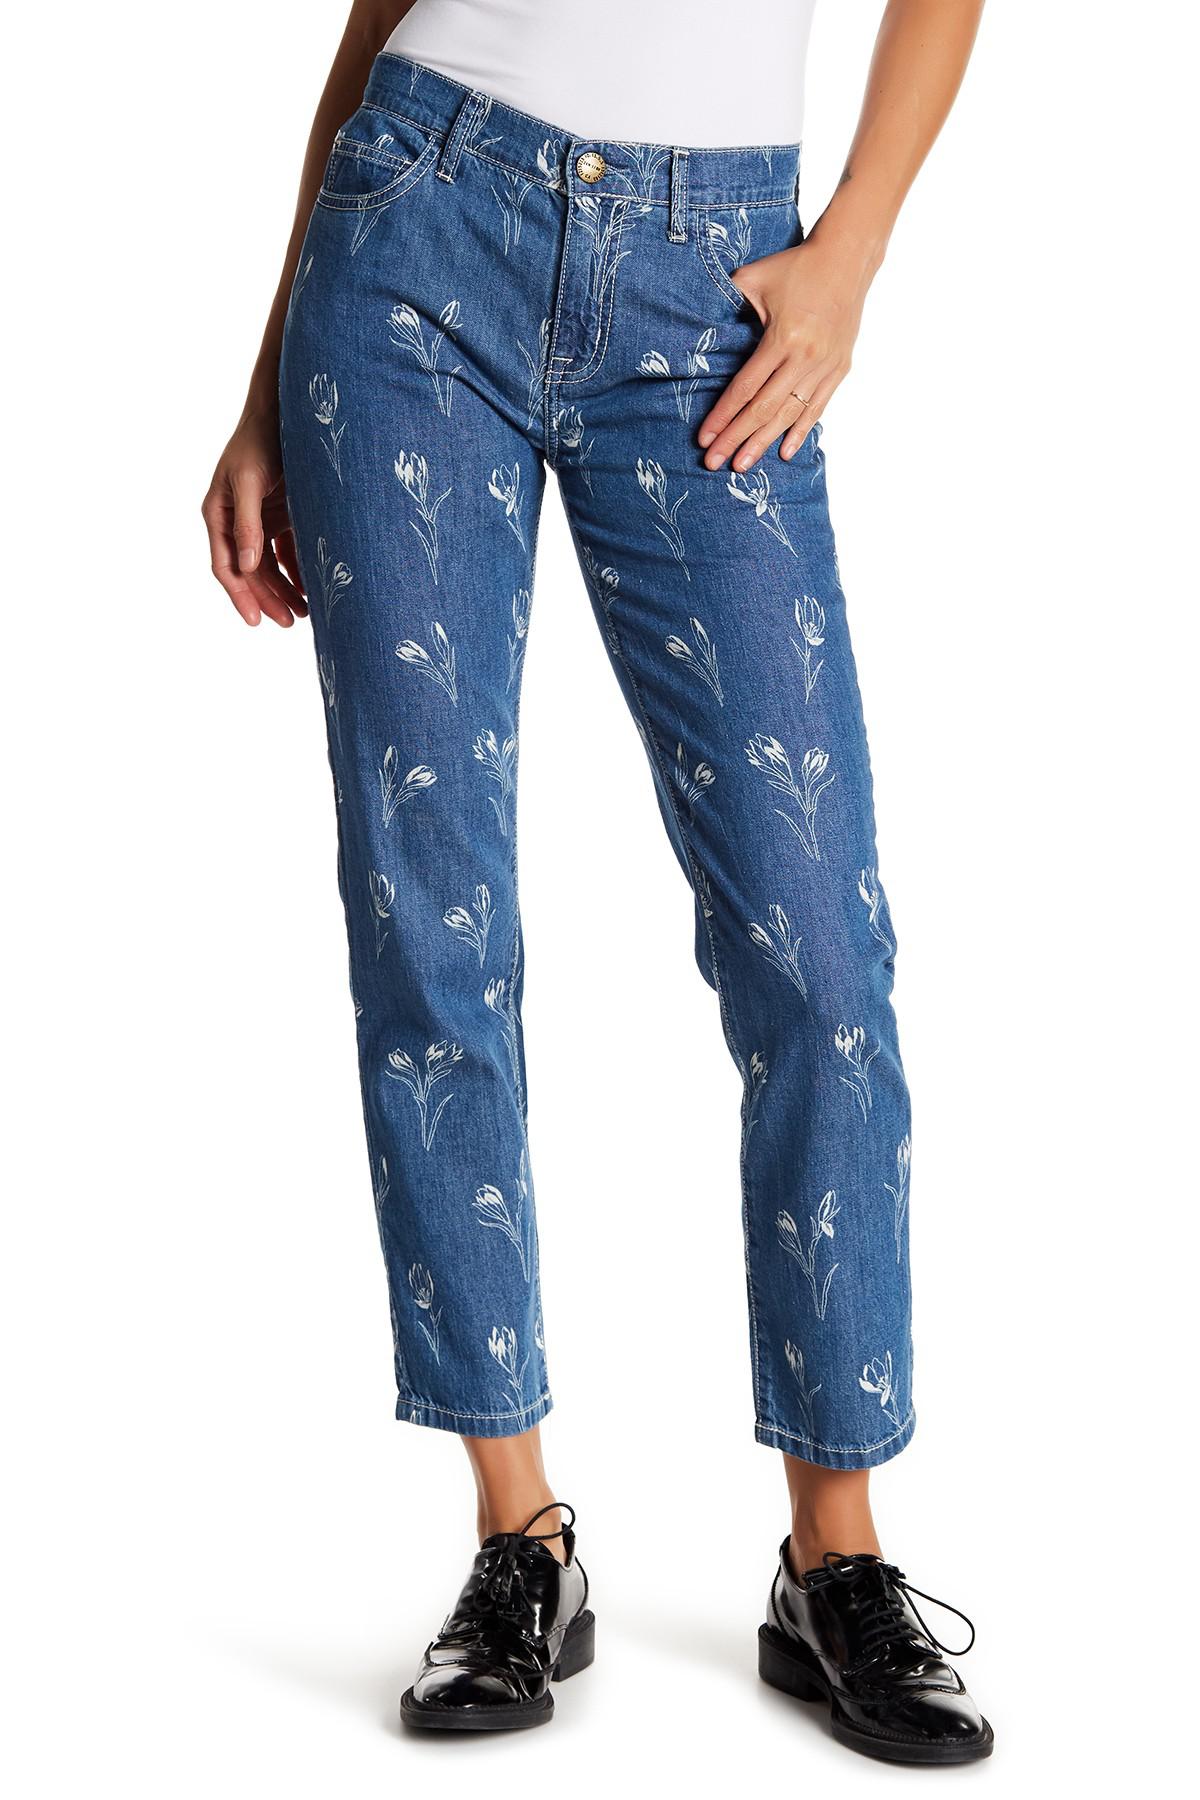 Current/Elliott Denim The Fling Floral Print Jeans in Blue - Lyst